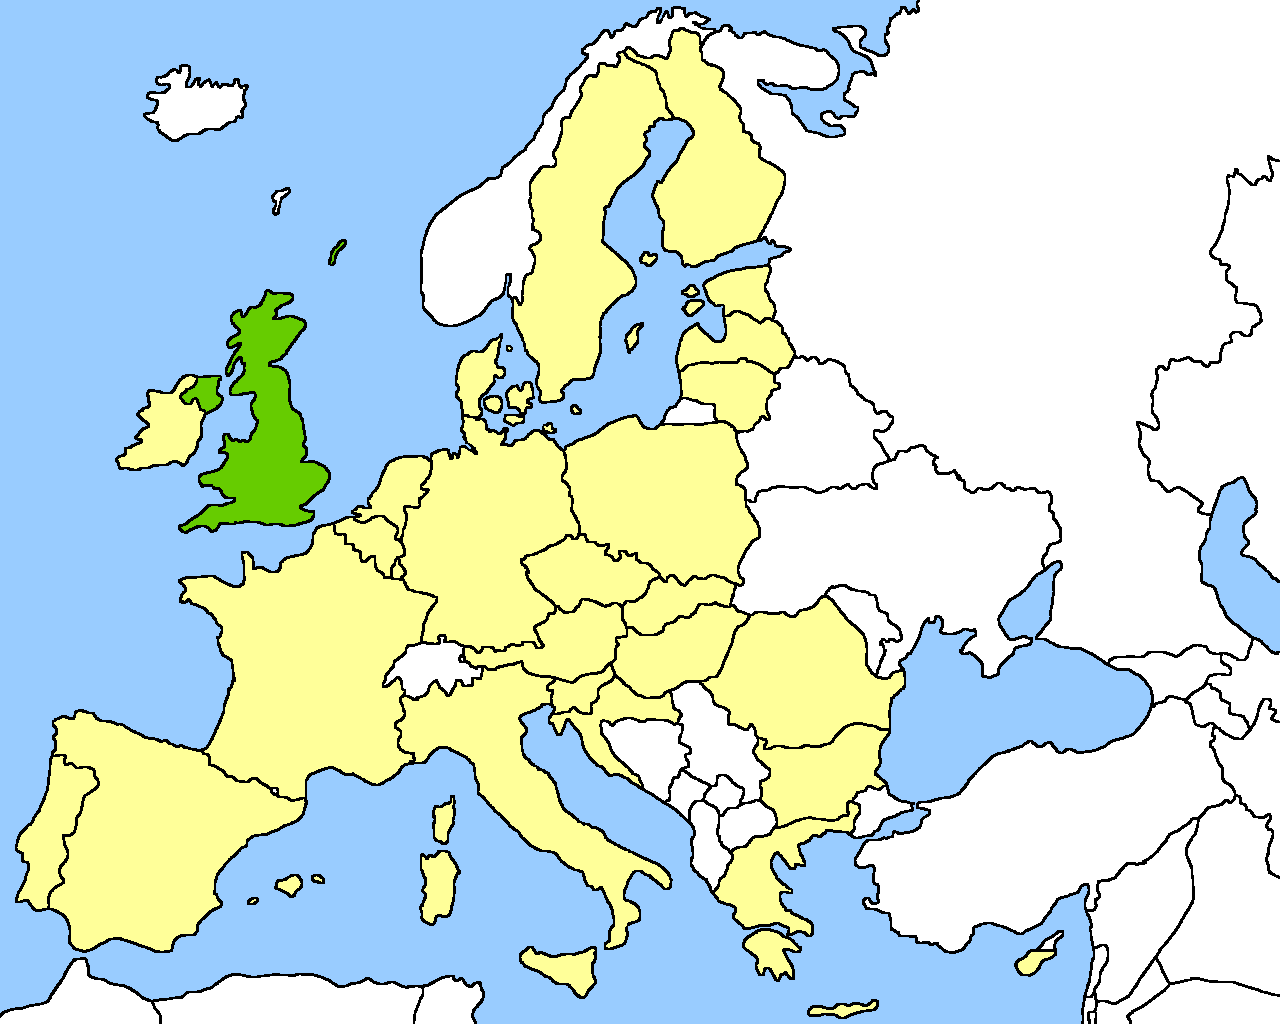 Location of UK